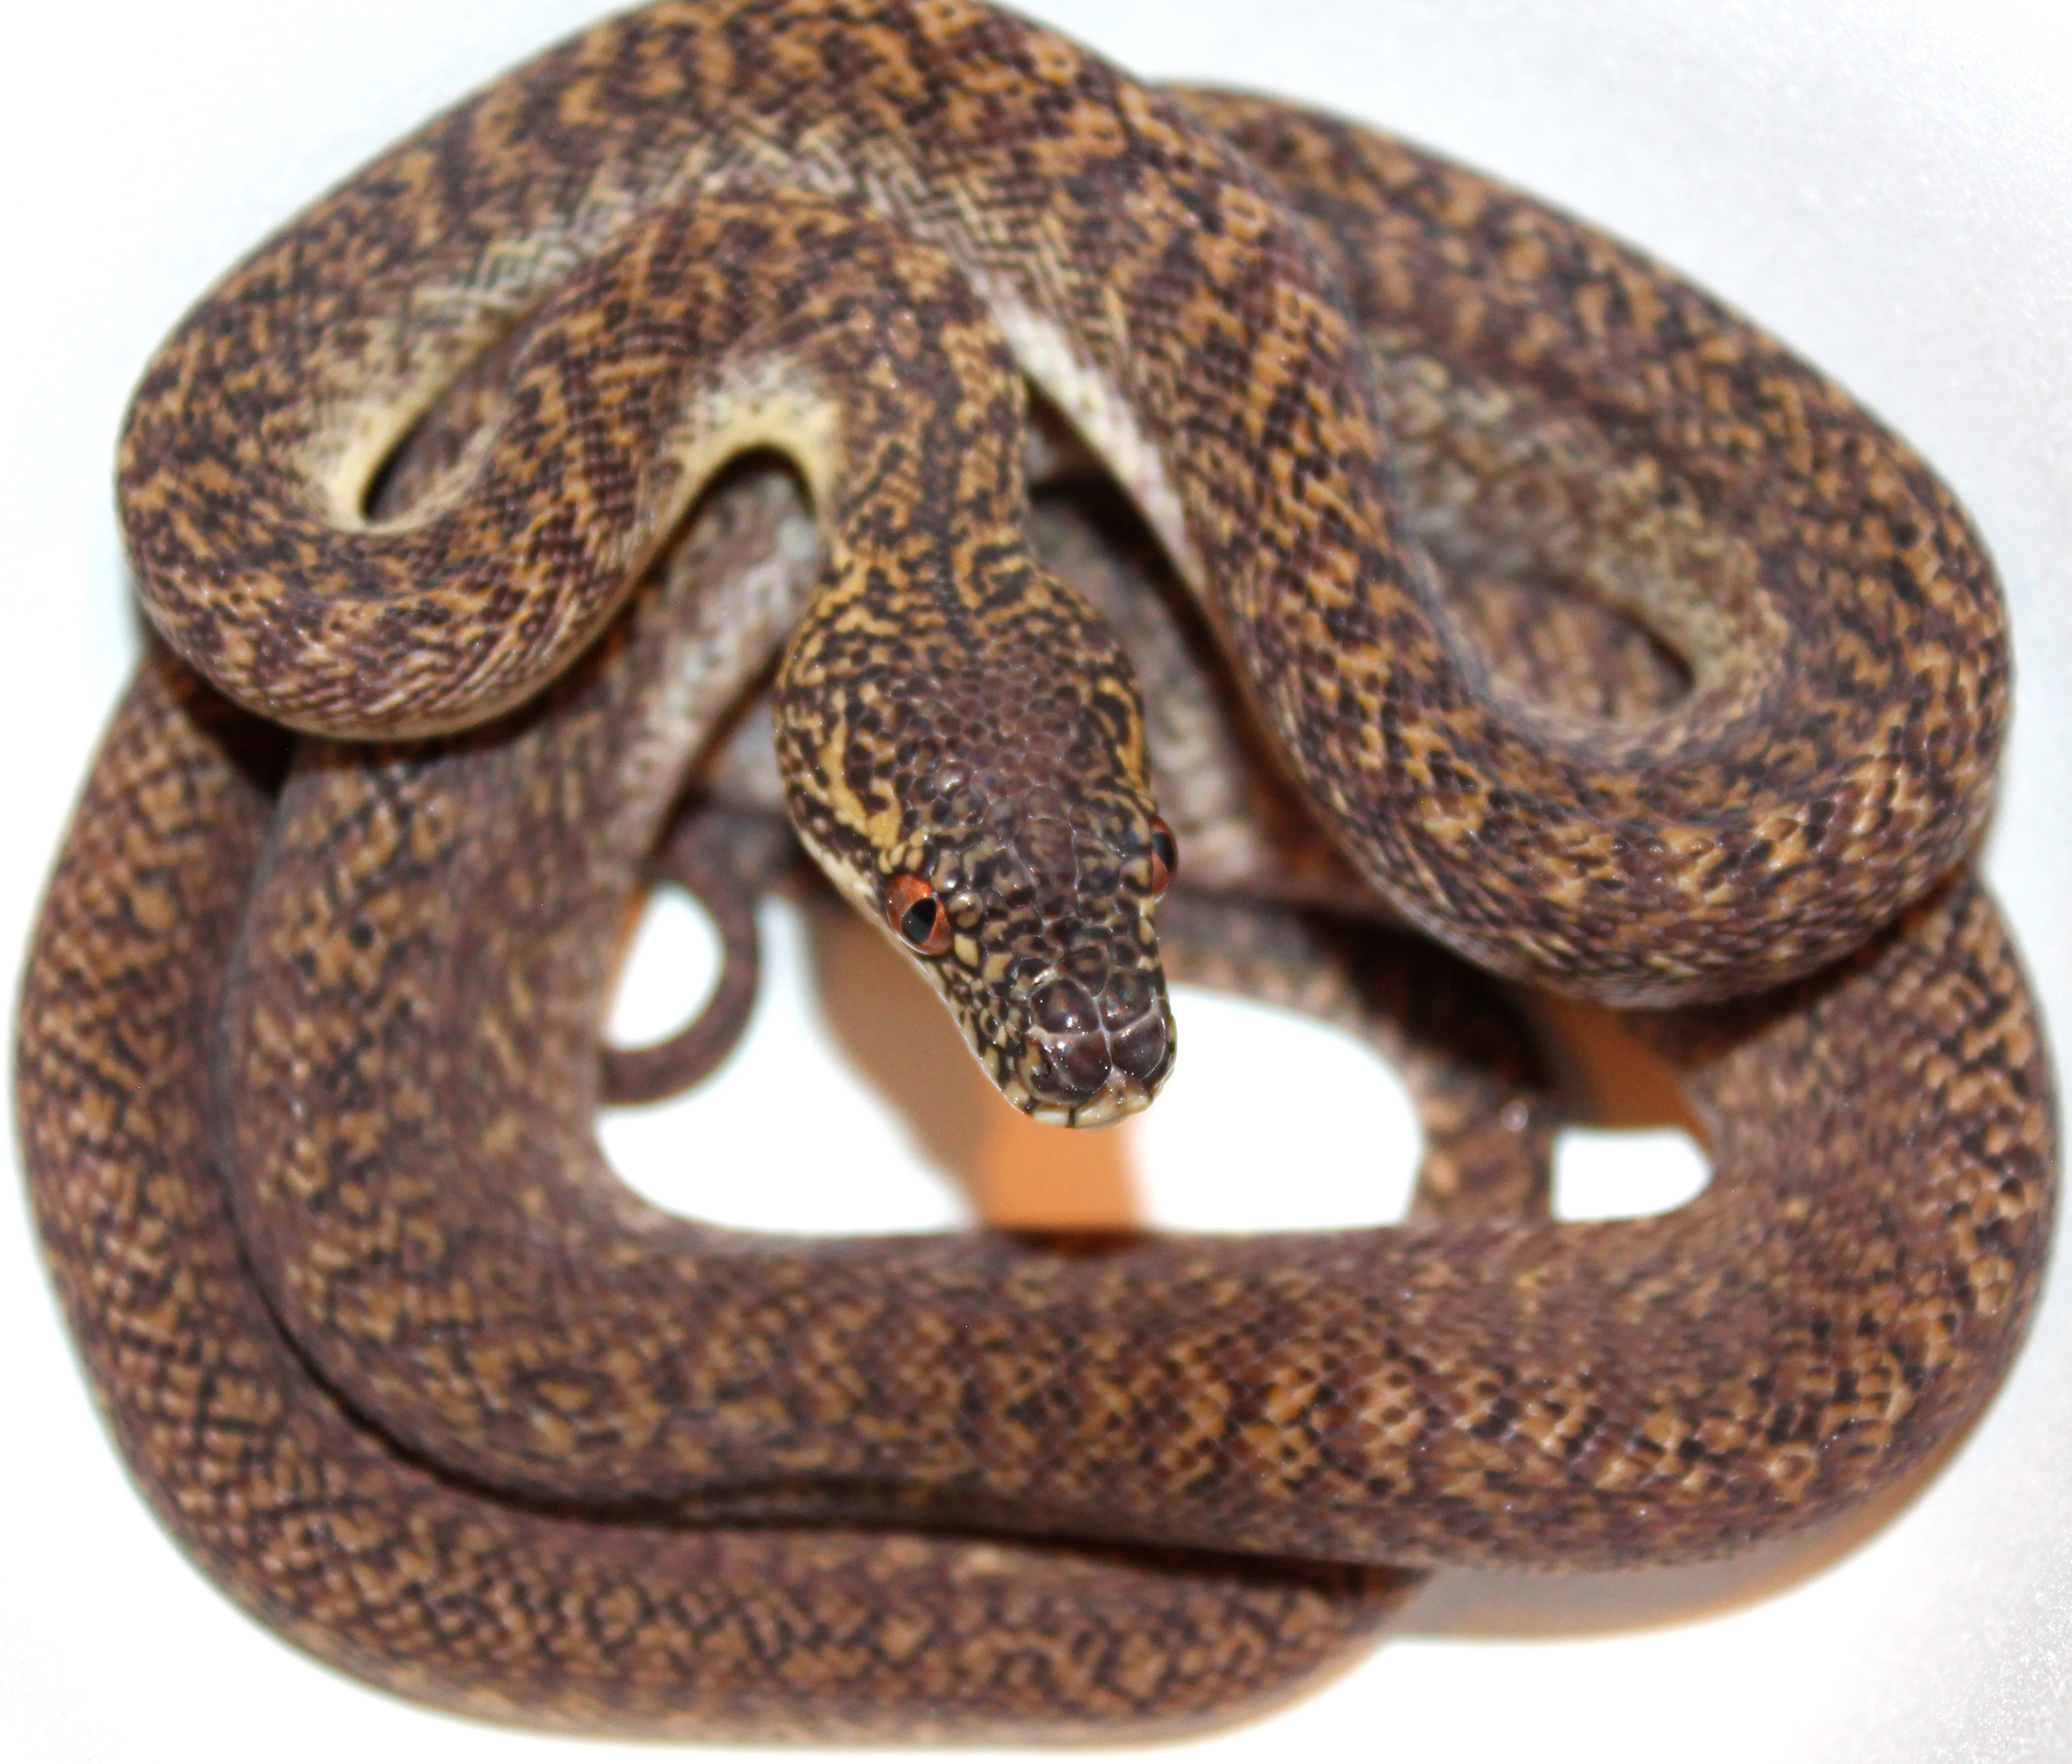 Granite Irian Jaya Carpet Python by Inland Reptile